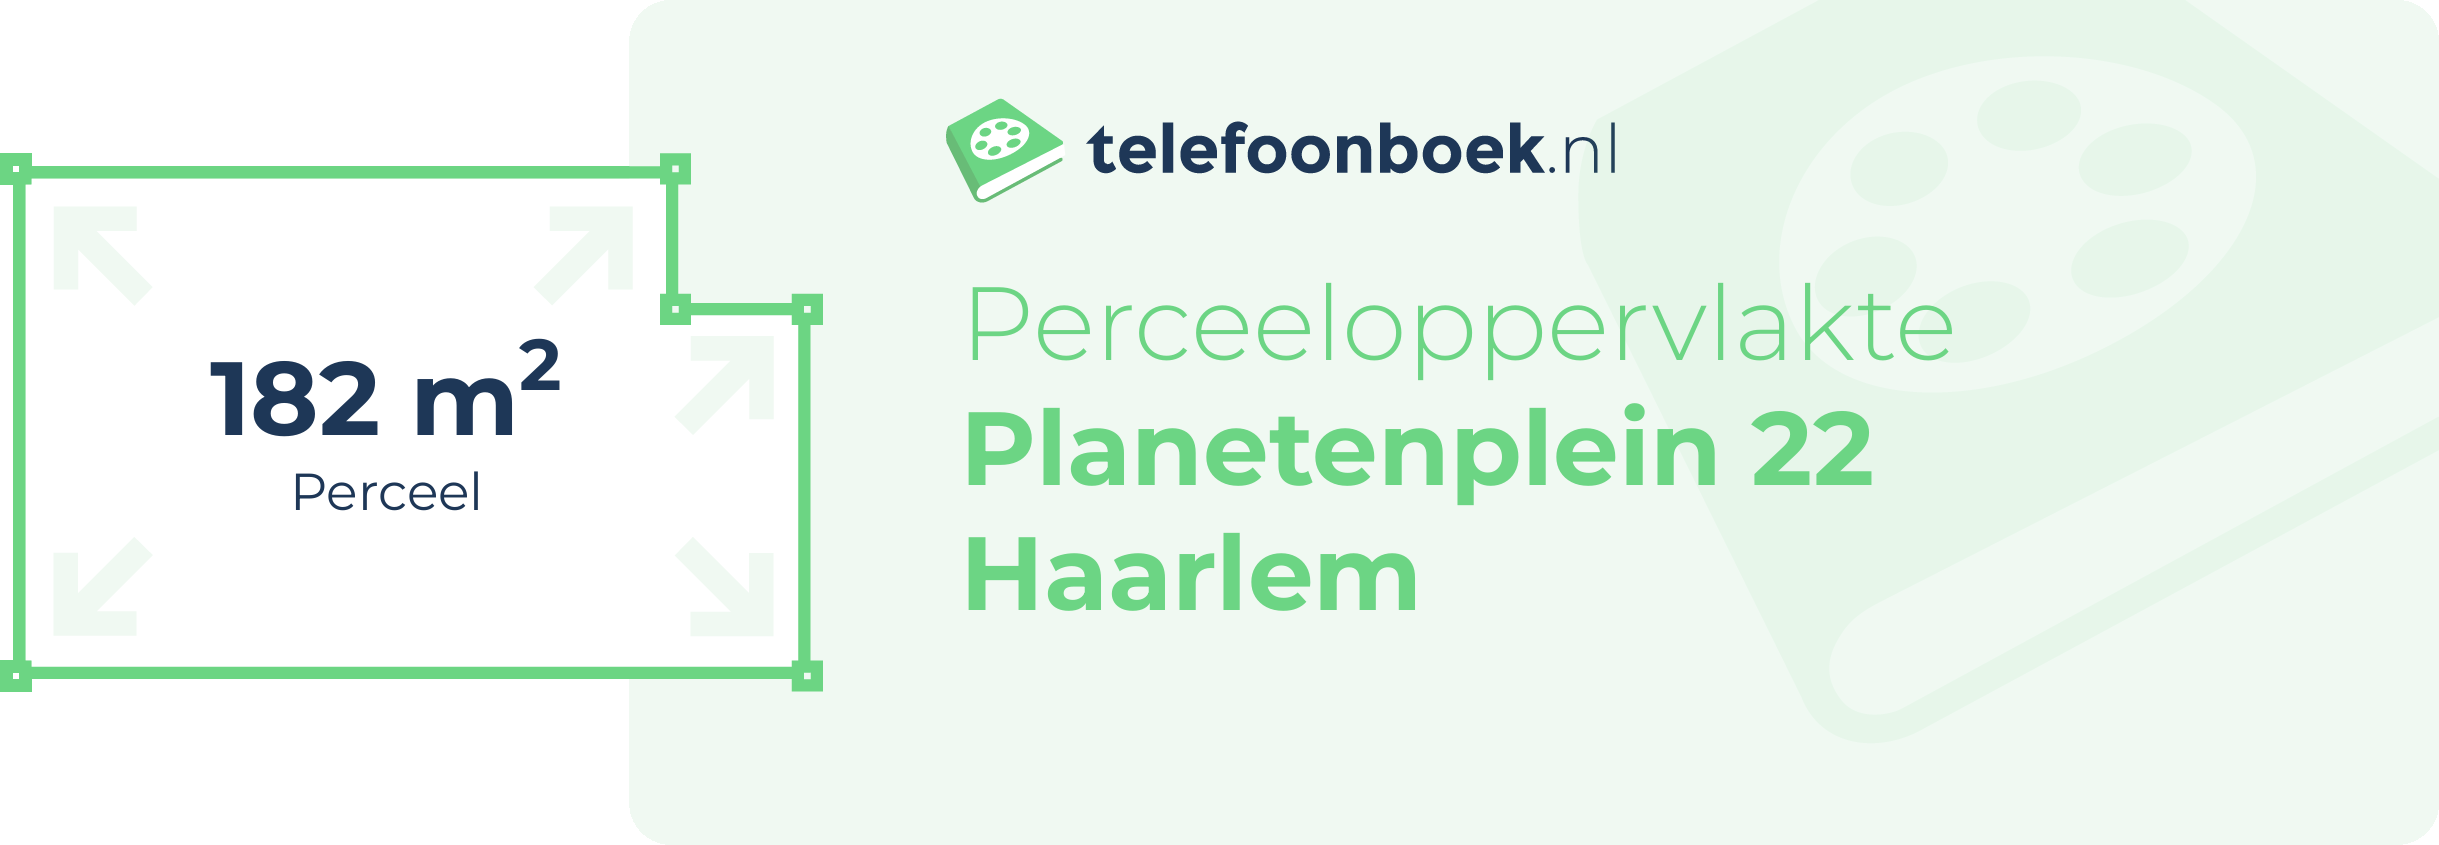 Perceeloppervlakte Planetenplein 22 Haarlem